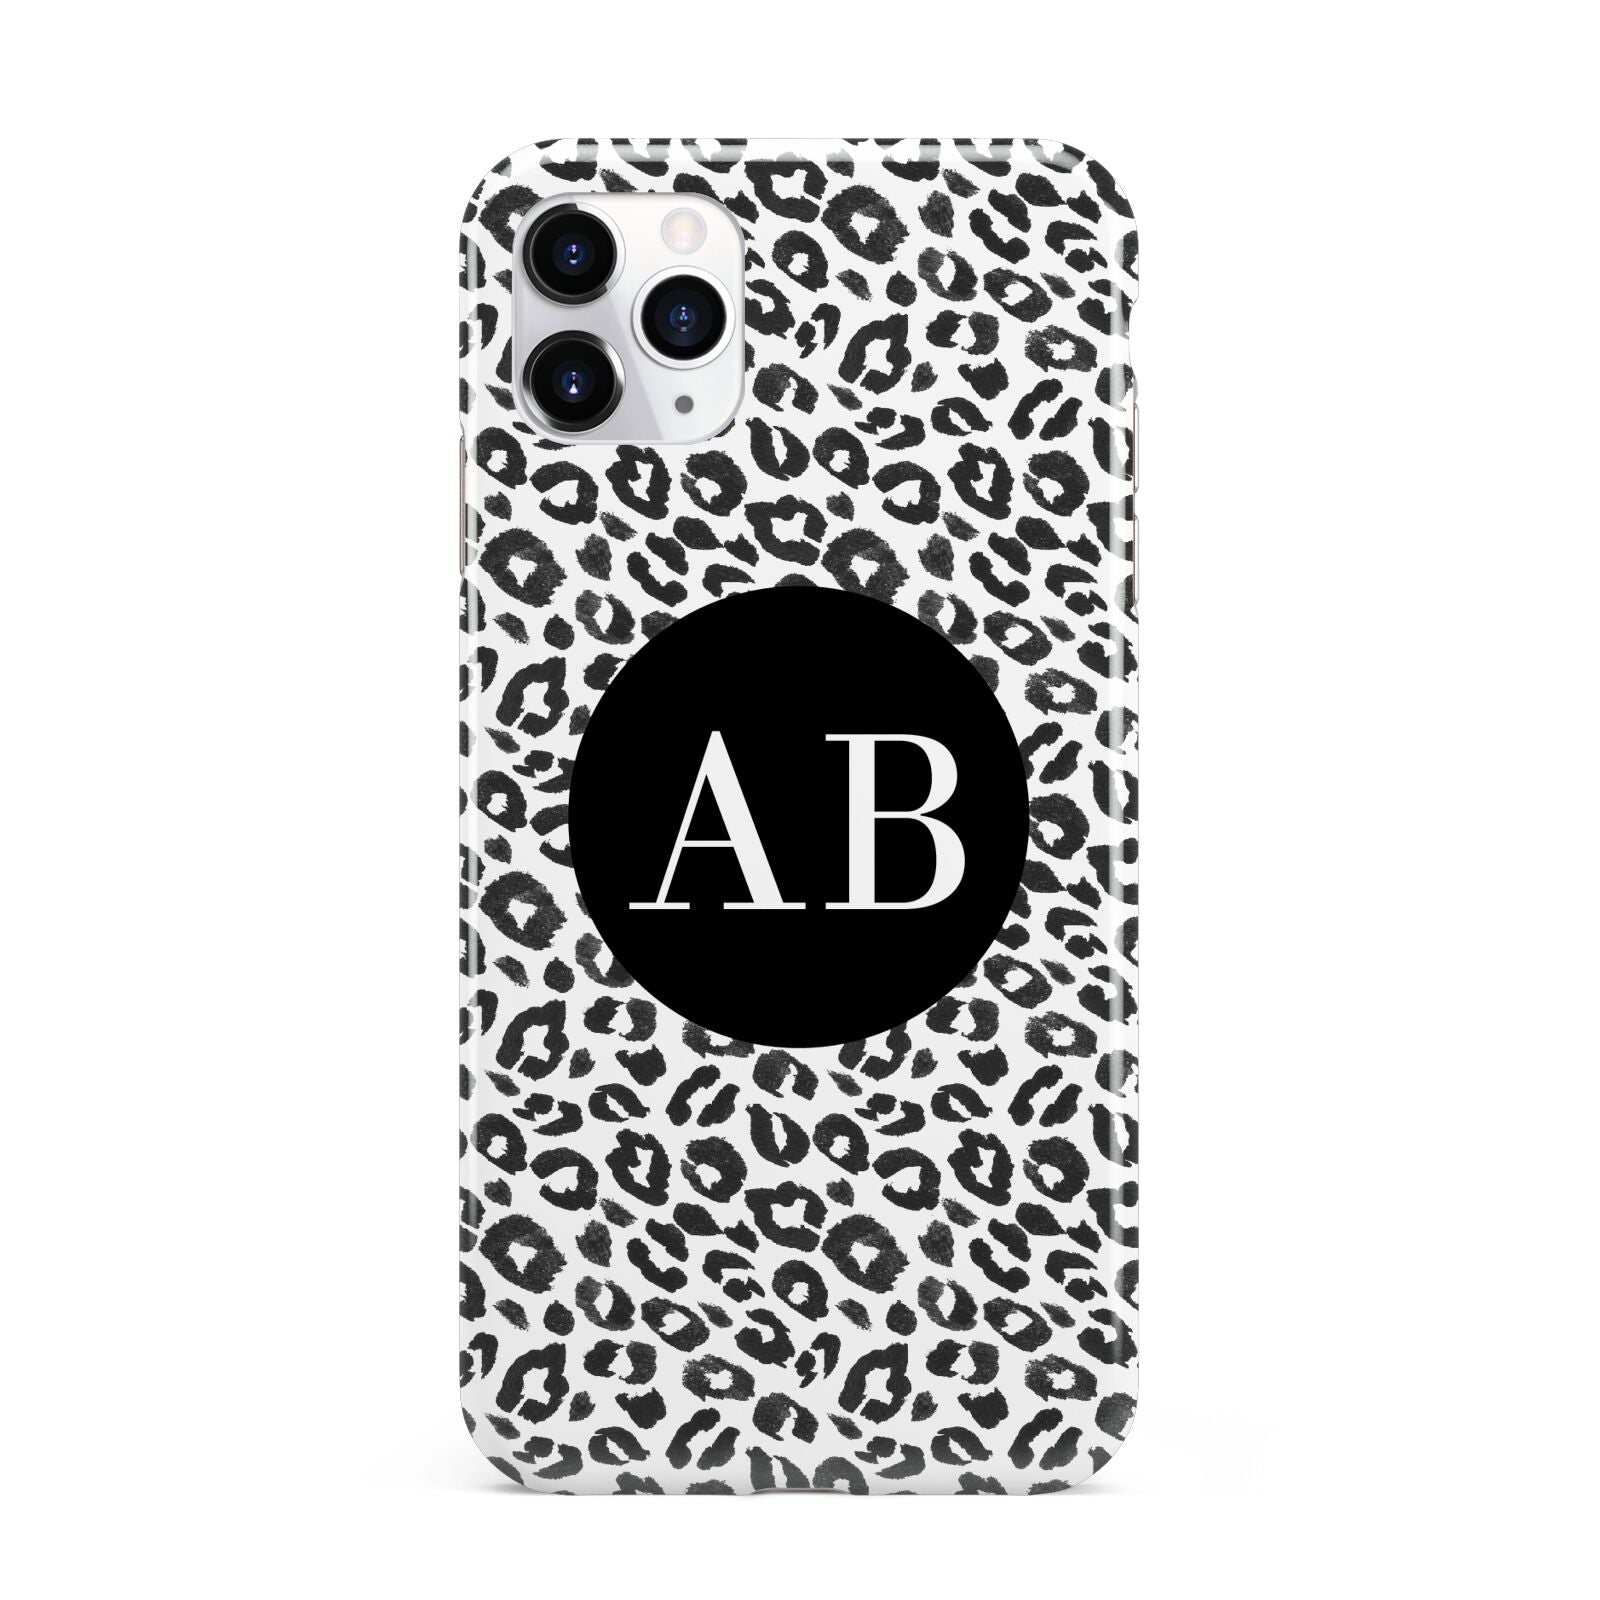 Leopard Print Black and White iPhone 11 Pro Max 3D Tough Case